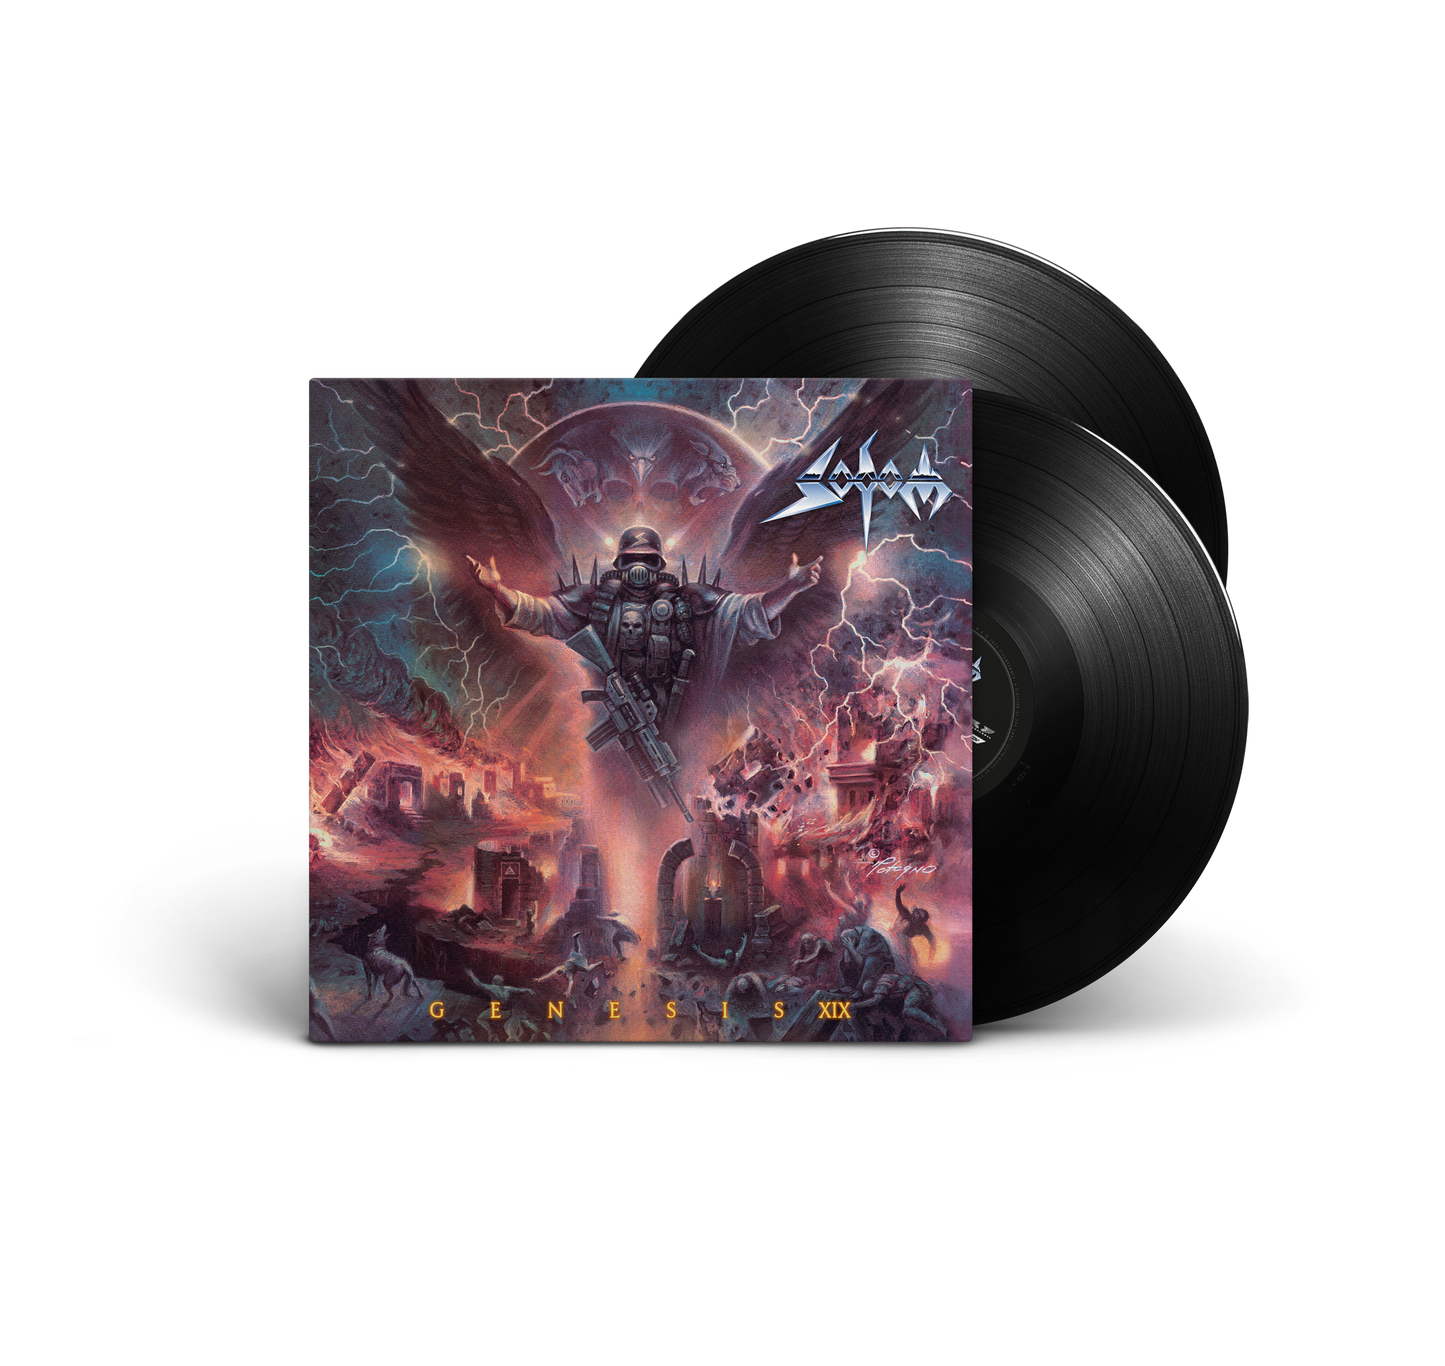 Sodom "Genesis XIX" LP